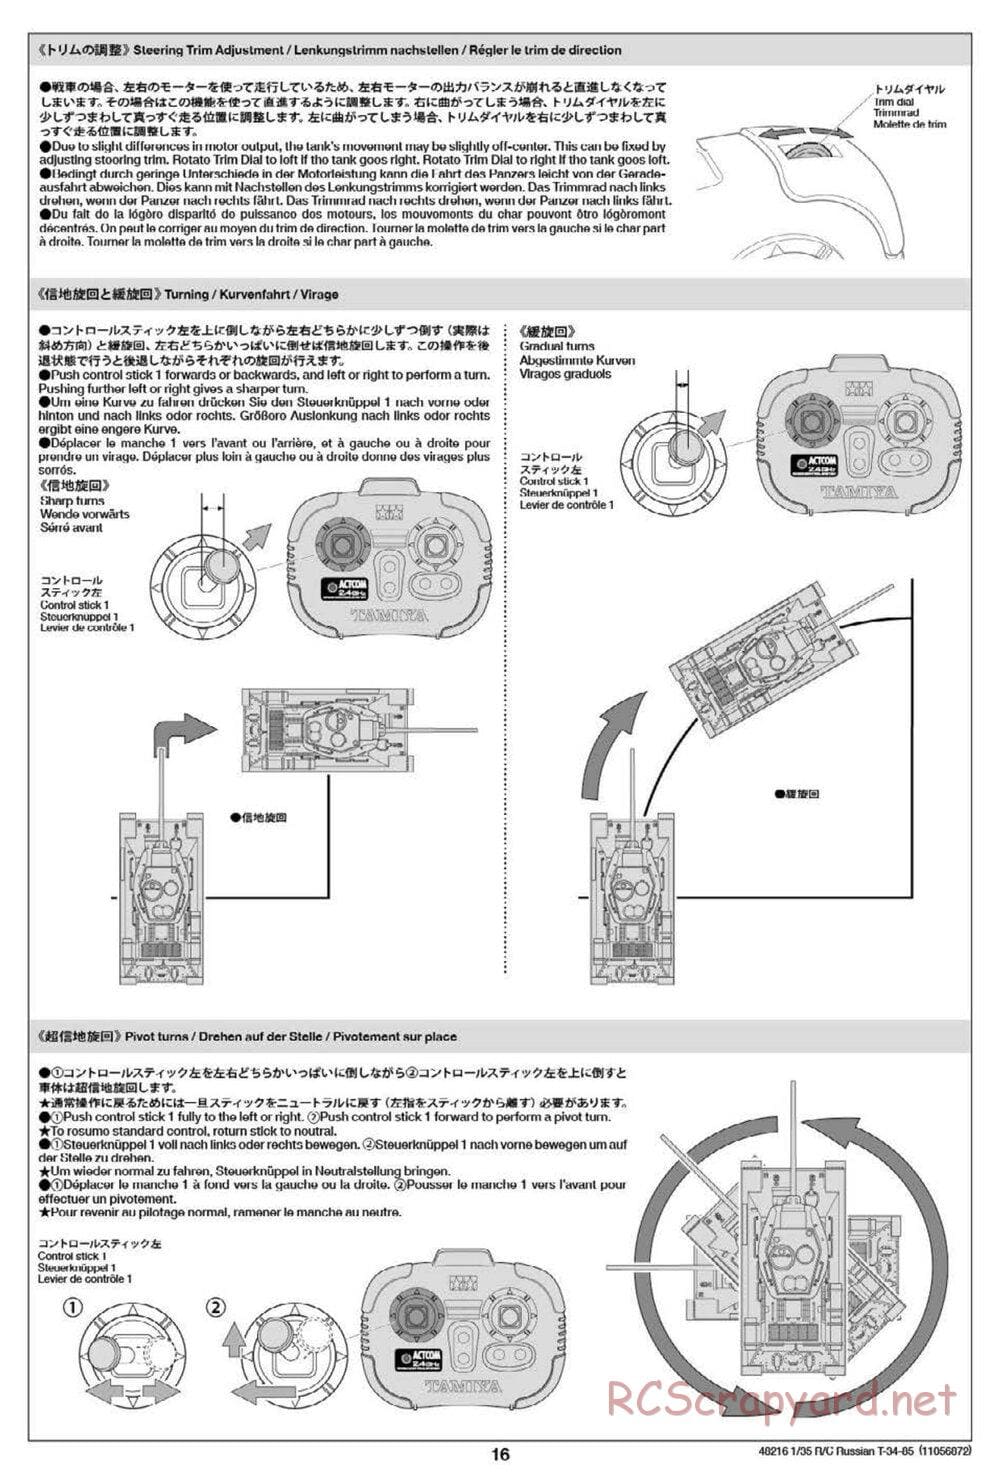 Tamiya - Russian Medium Tank T-34-85 - 1/35 Scale Chassis - Manual - Page 16